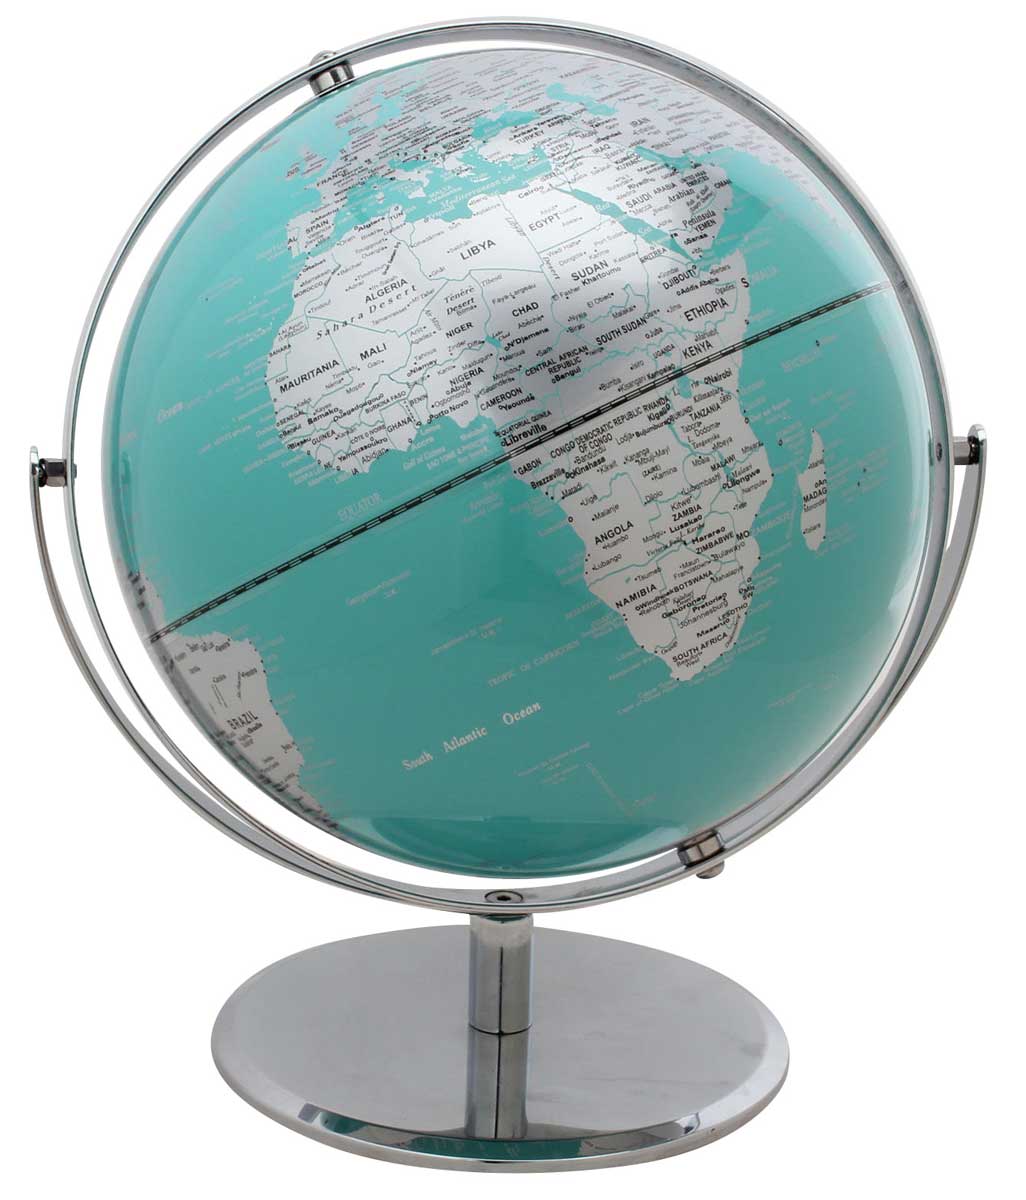 Vespucci Turquoise World Globe by J. Thomas